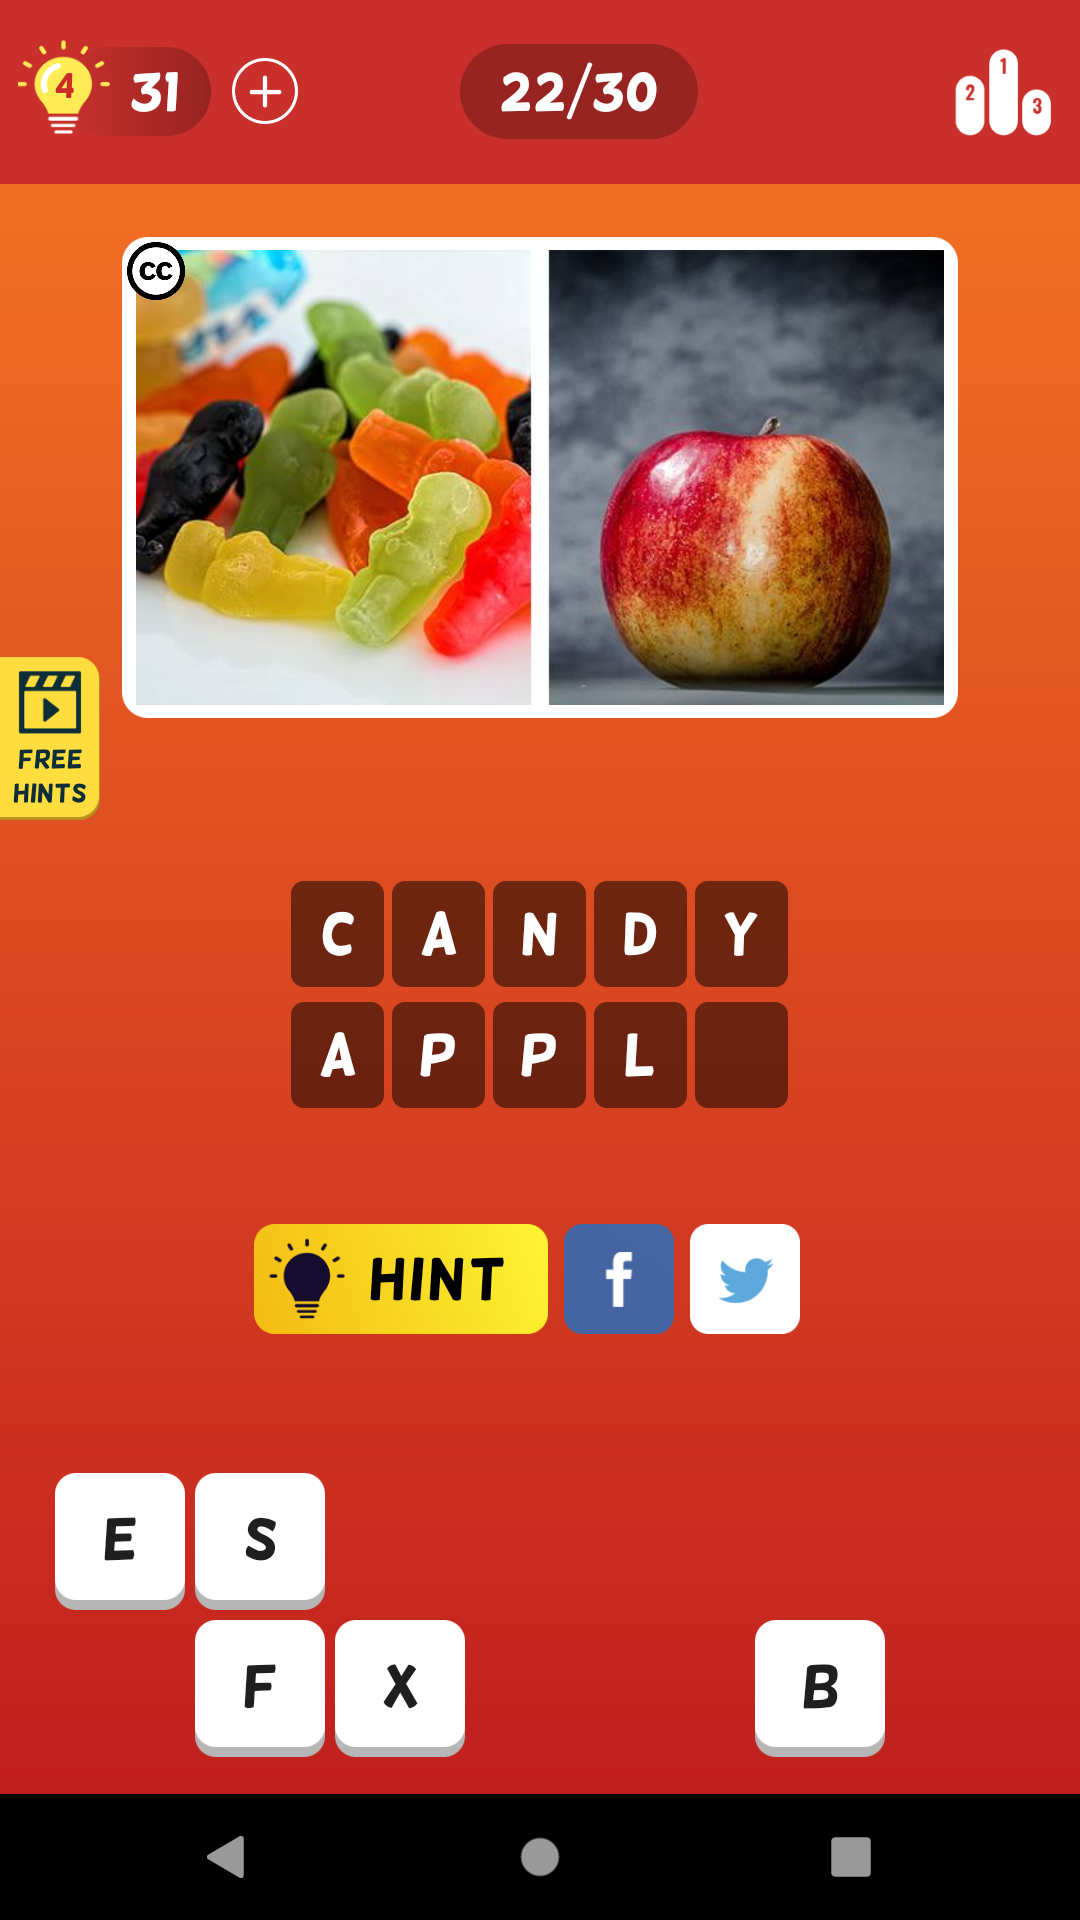 2 Pics Quiz: Word Guessing gameのキャプチャ